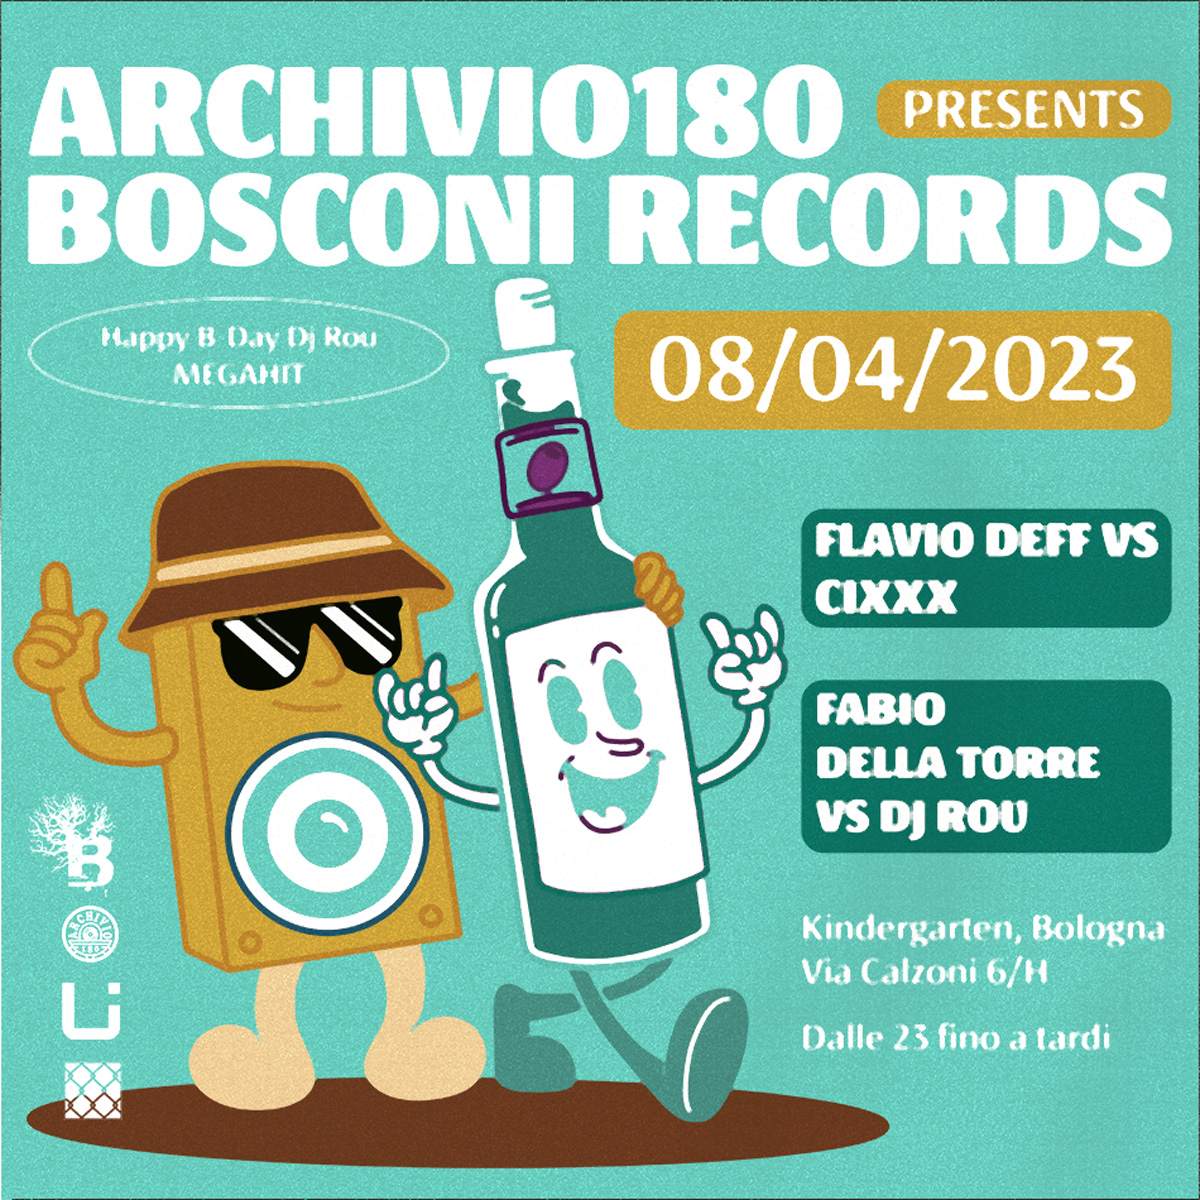 ARCHIO180 Pres. BOSCONI RECORDS W/ Fabio della Torre vs DJ Rou • Flavio Deff vs Cixxx J - Página frontal